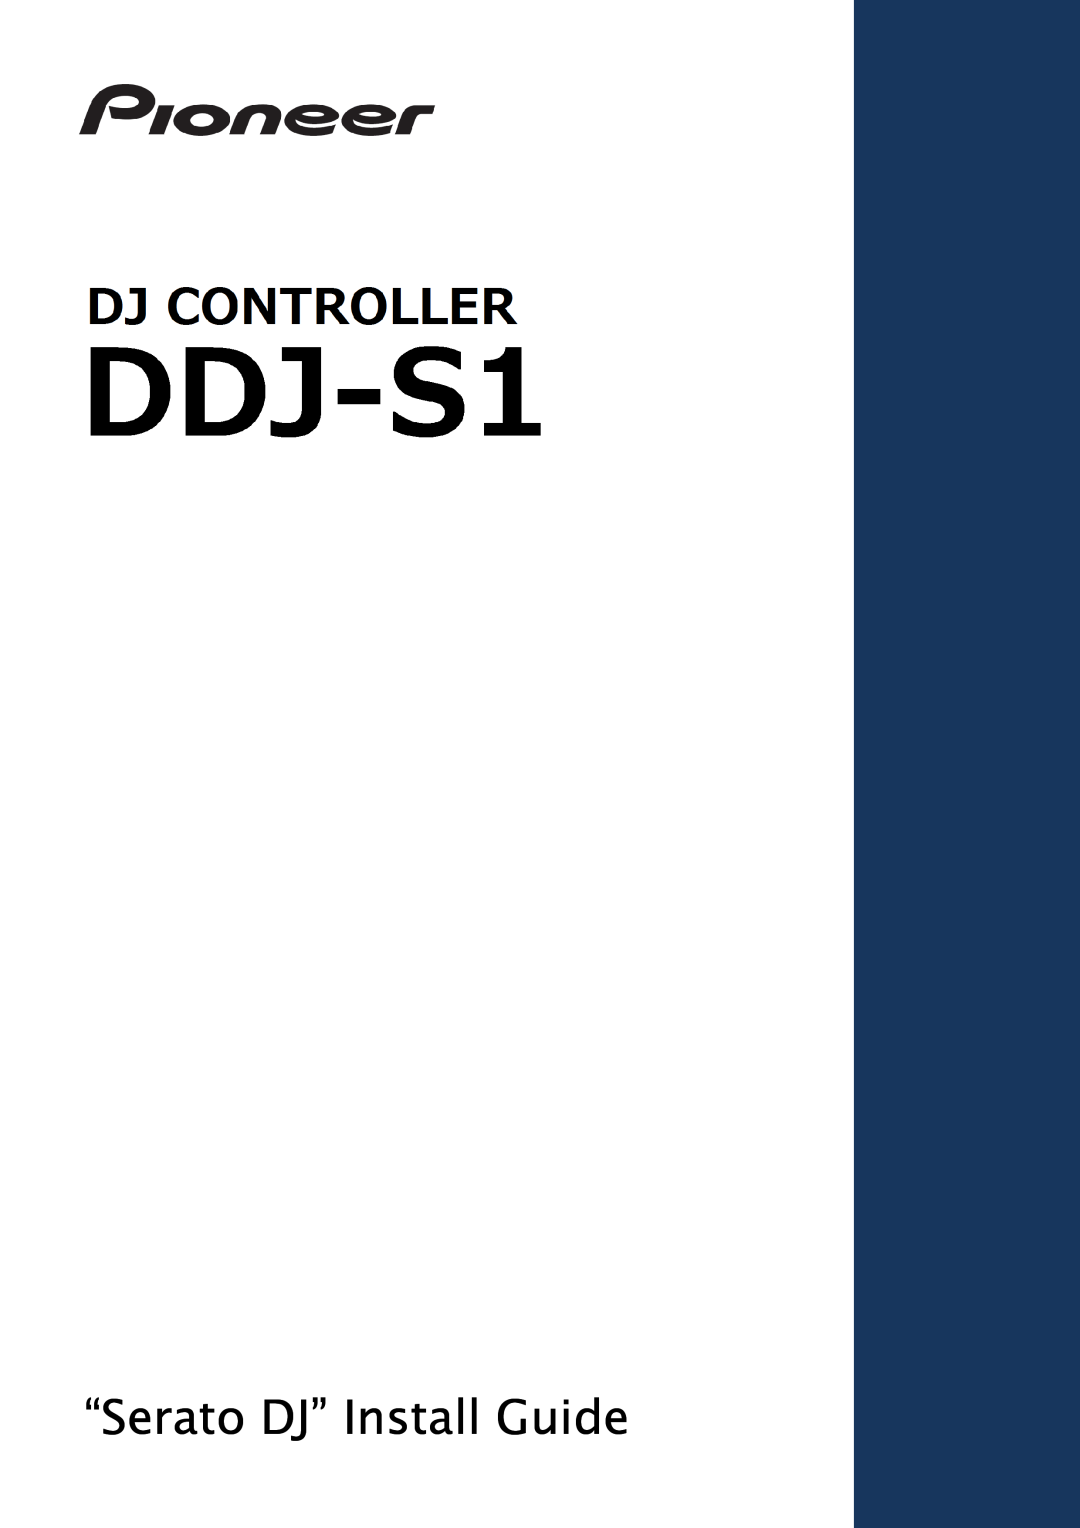 Pioneer PIONEER DJ Controller manual “Serato DJ” Install Guide 